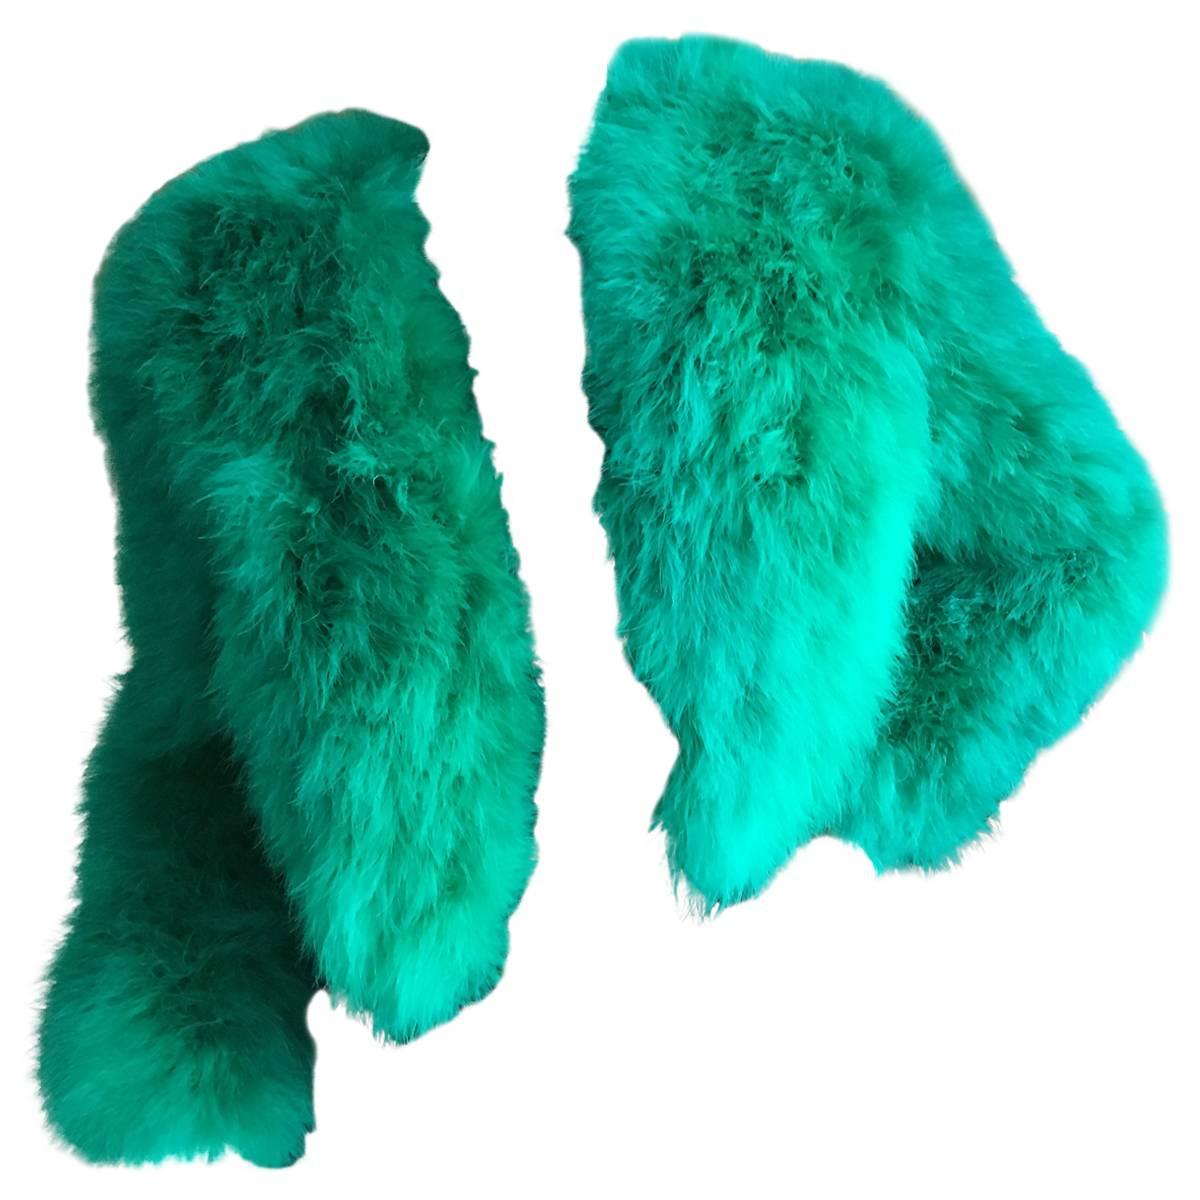  Saint Laurent by Hedi Slimane 2015 Green Turkey Feather Jacket For Sale